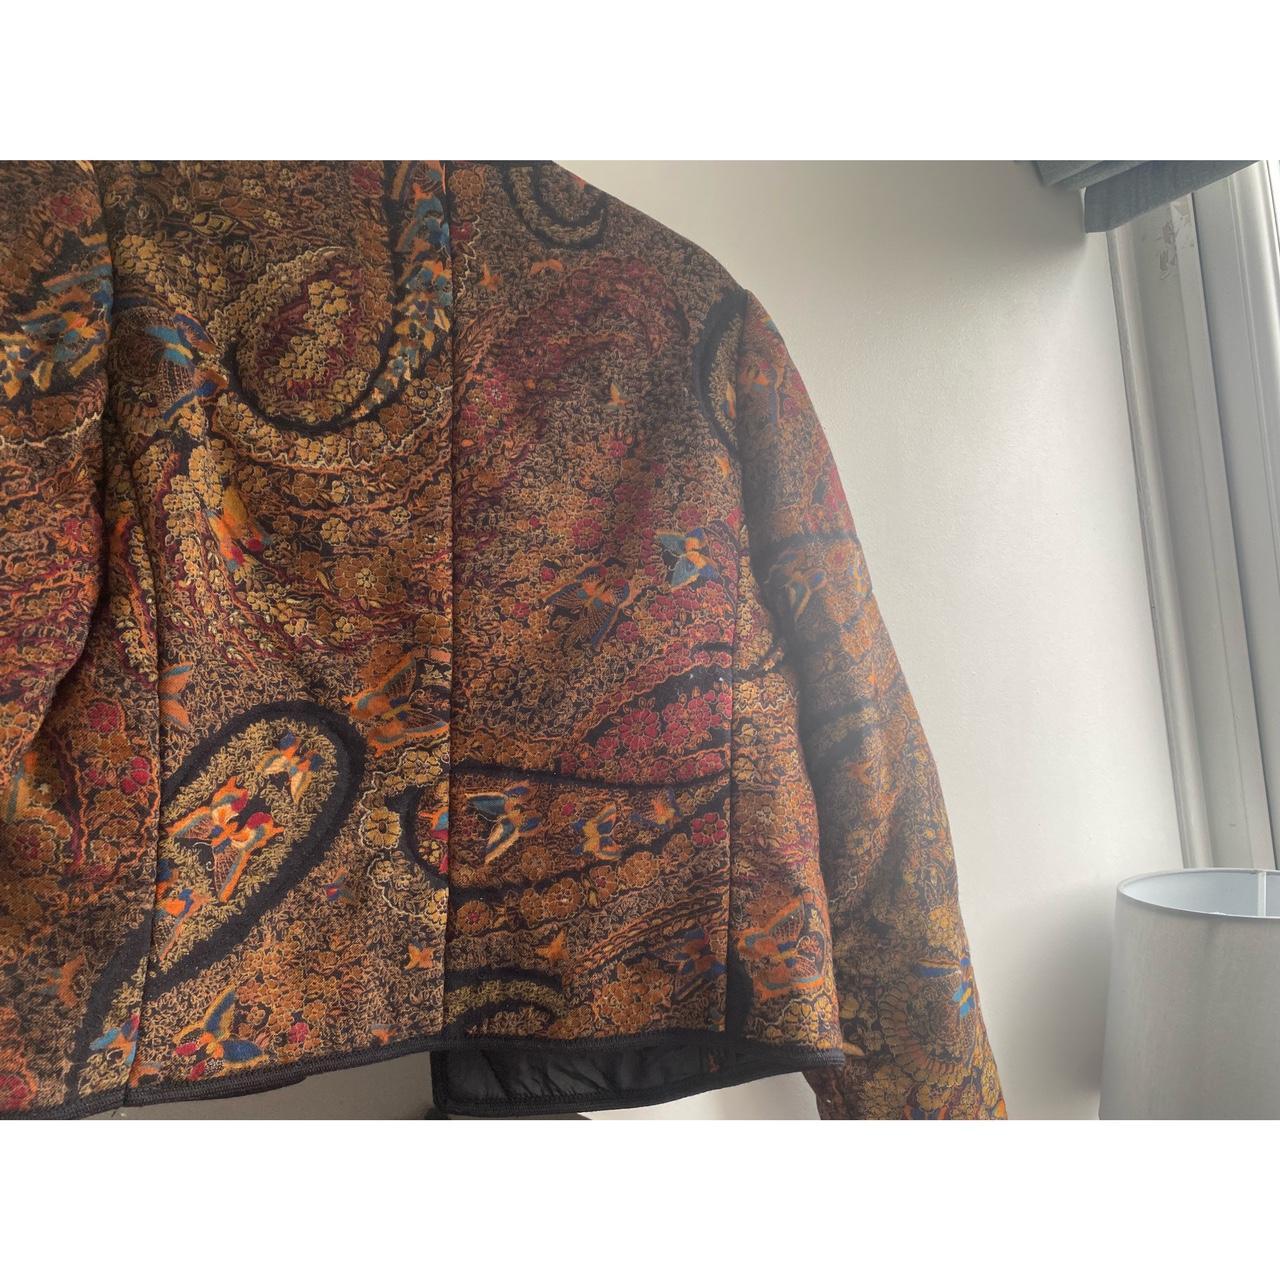 vintage Louis Feraud Paris blazer jacket orange - Depop